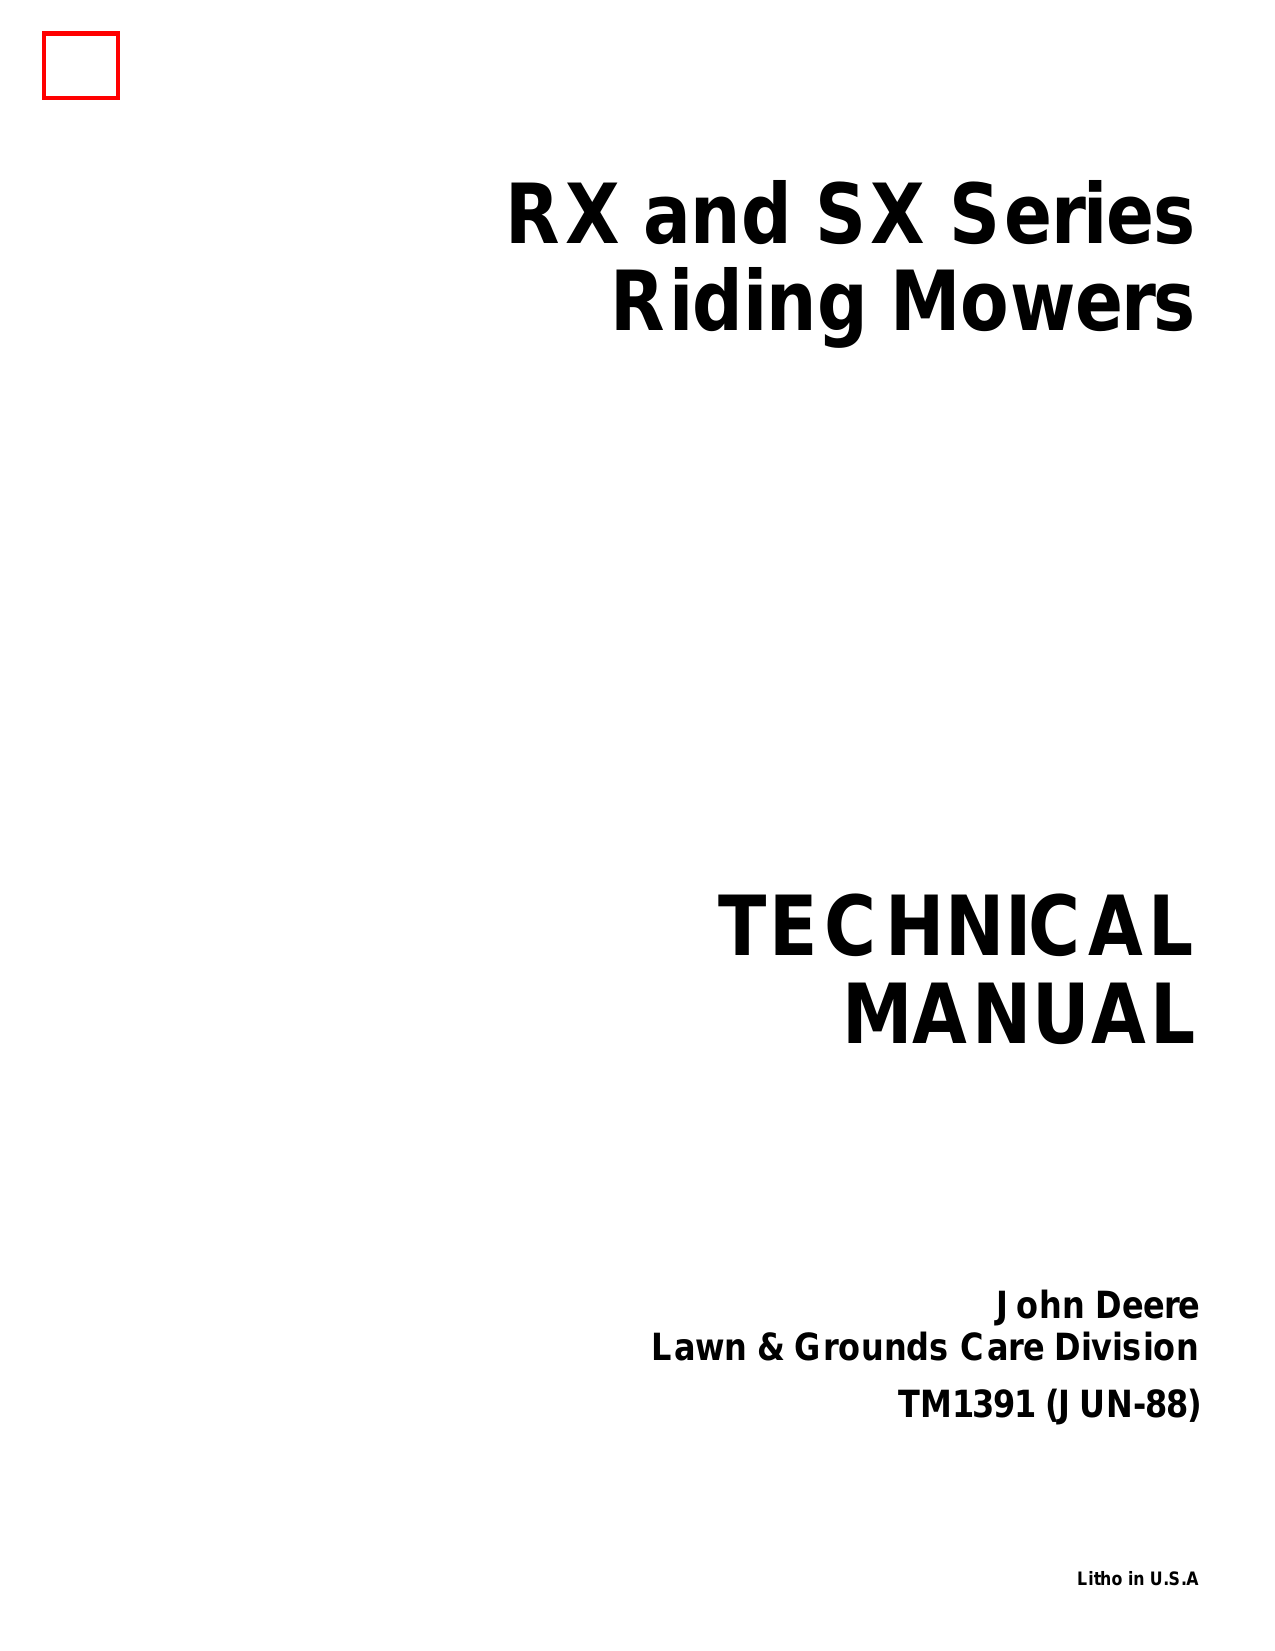  John Deere RX63, RX73, TX75, SX75, RX95, SX95 riding lawn mower technical manual Preview image 1